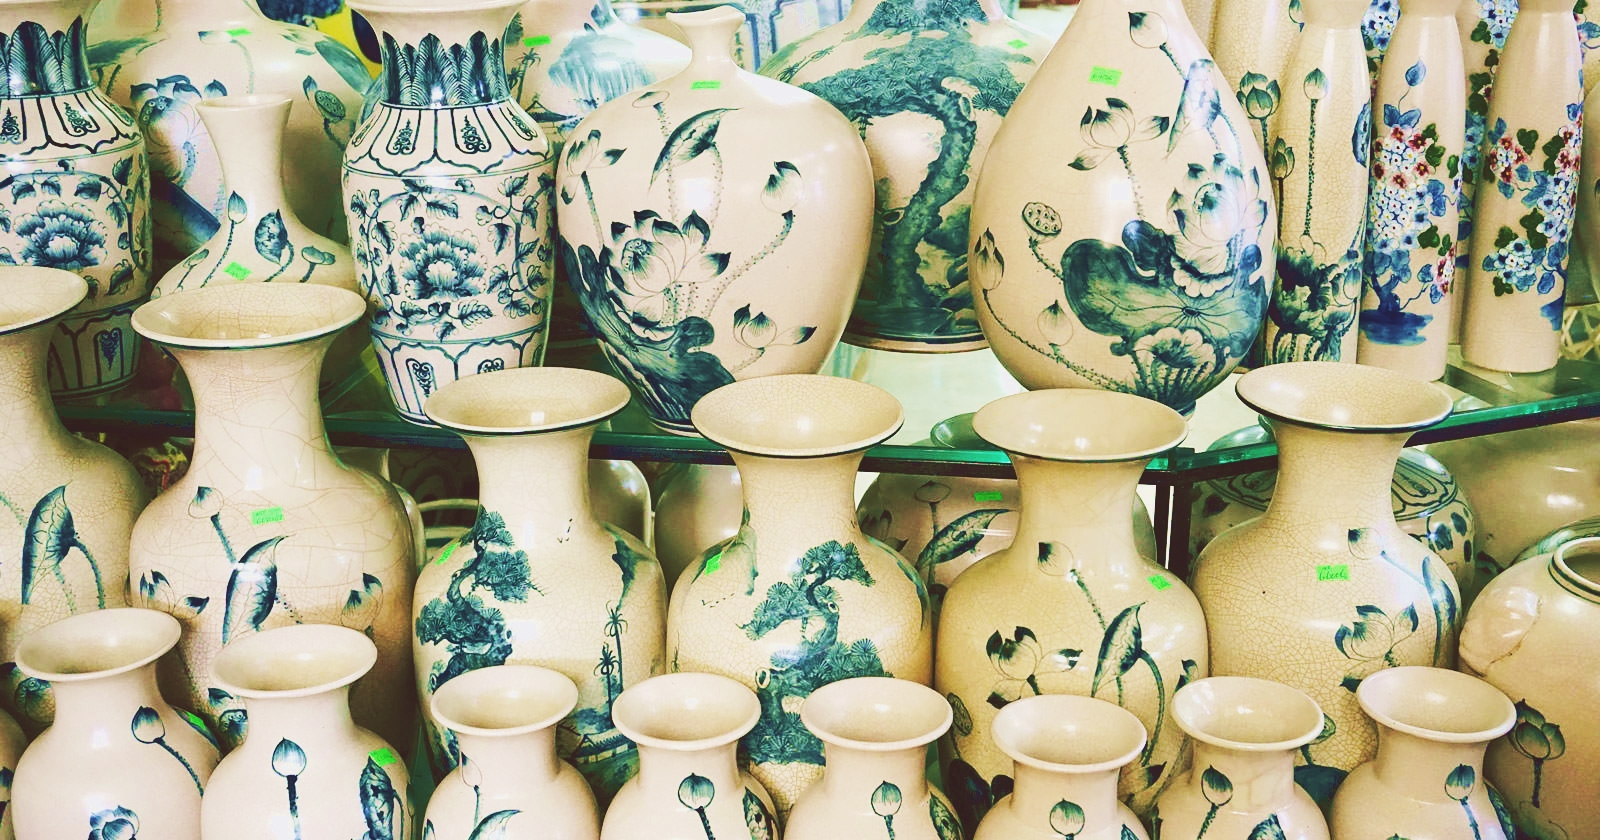 Museum of Trade Ceramic in Hoian